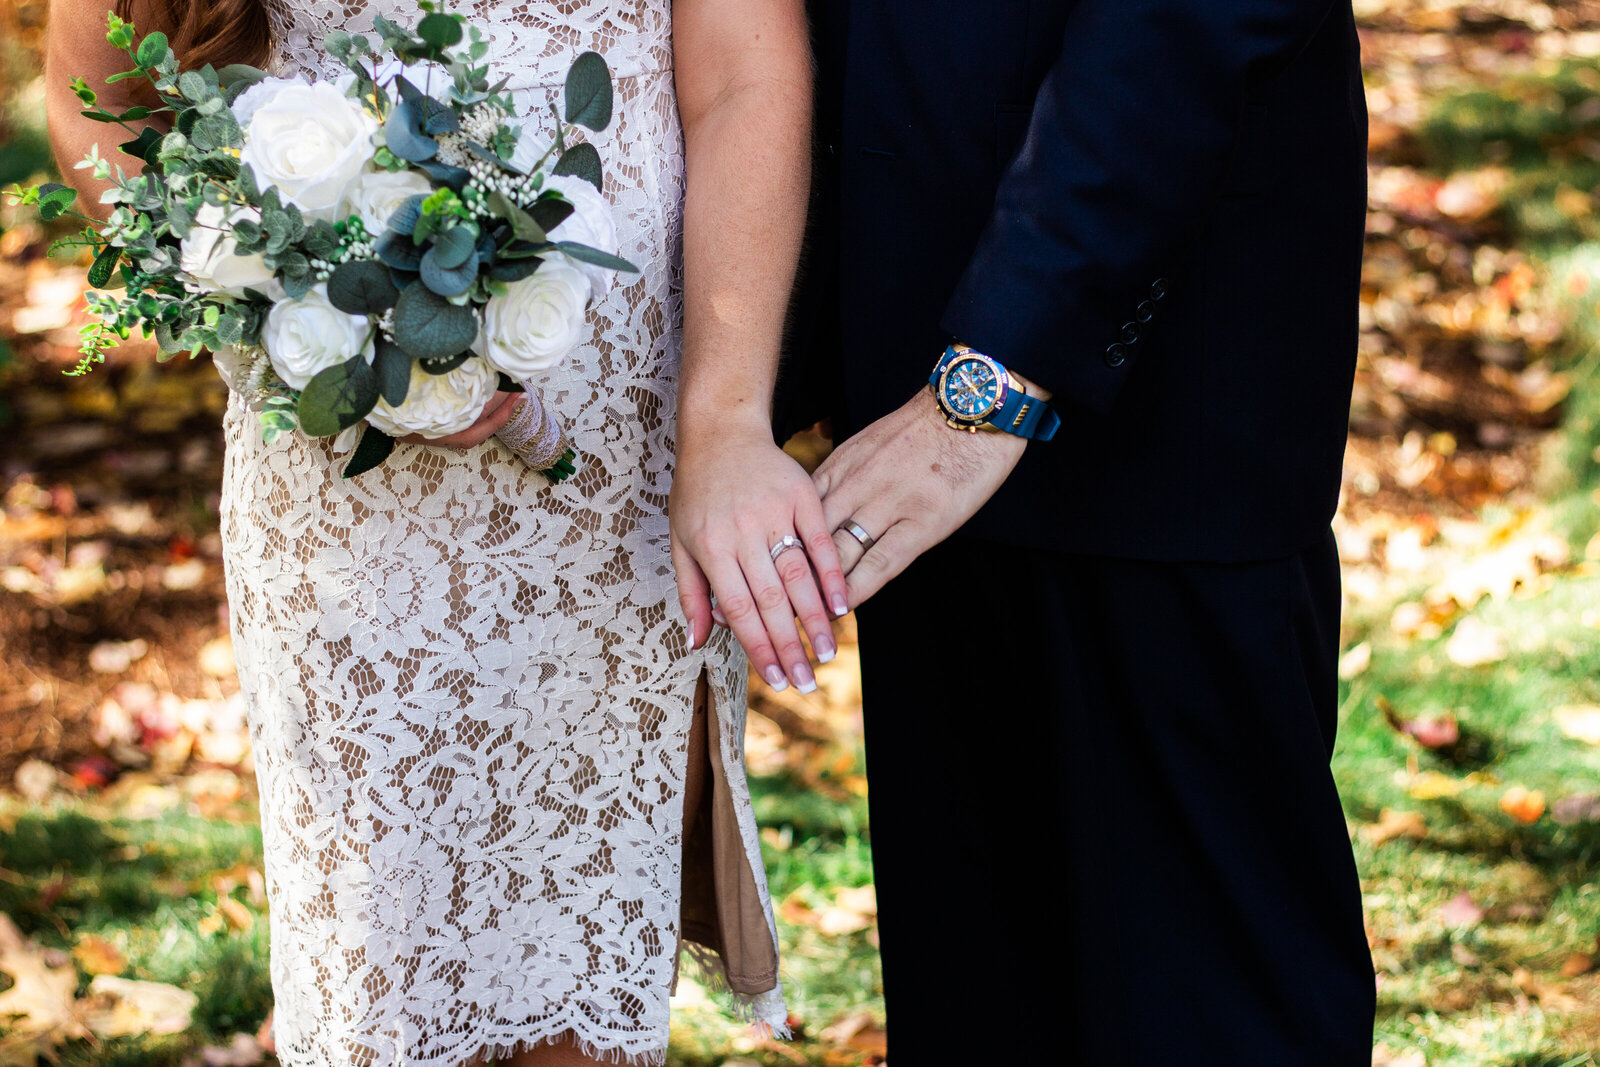 Central Massachusetts Wedding Photographer | Jenna Rose Photography